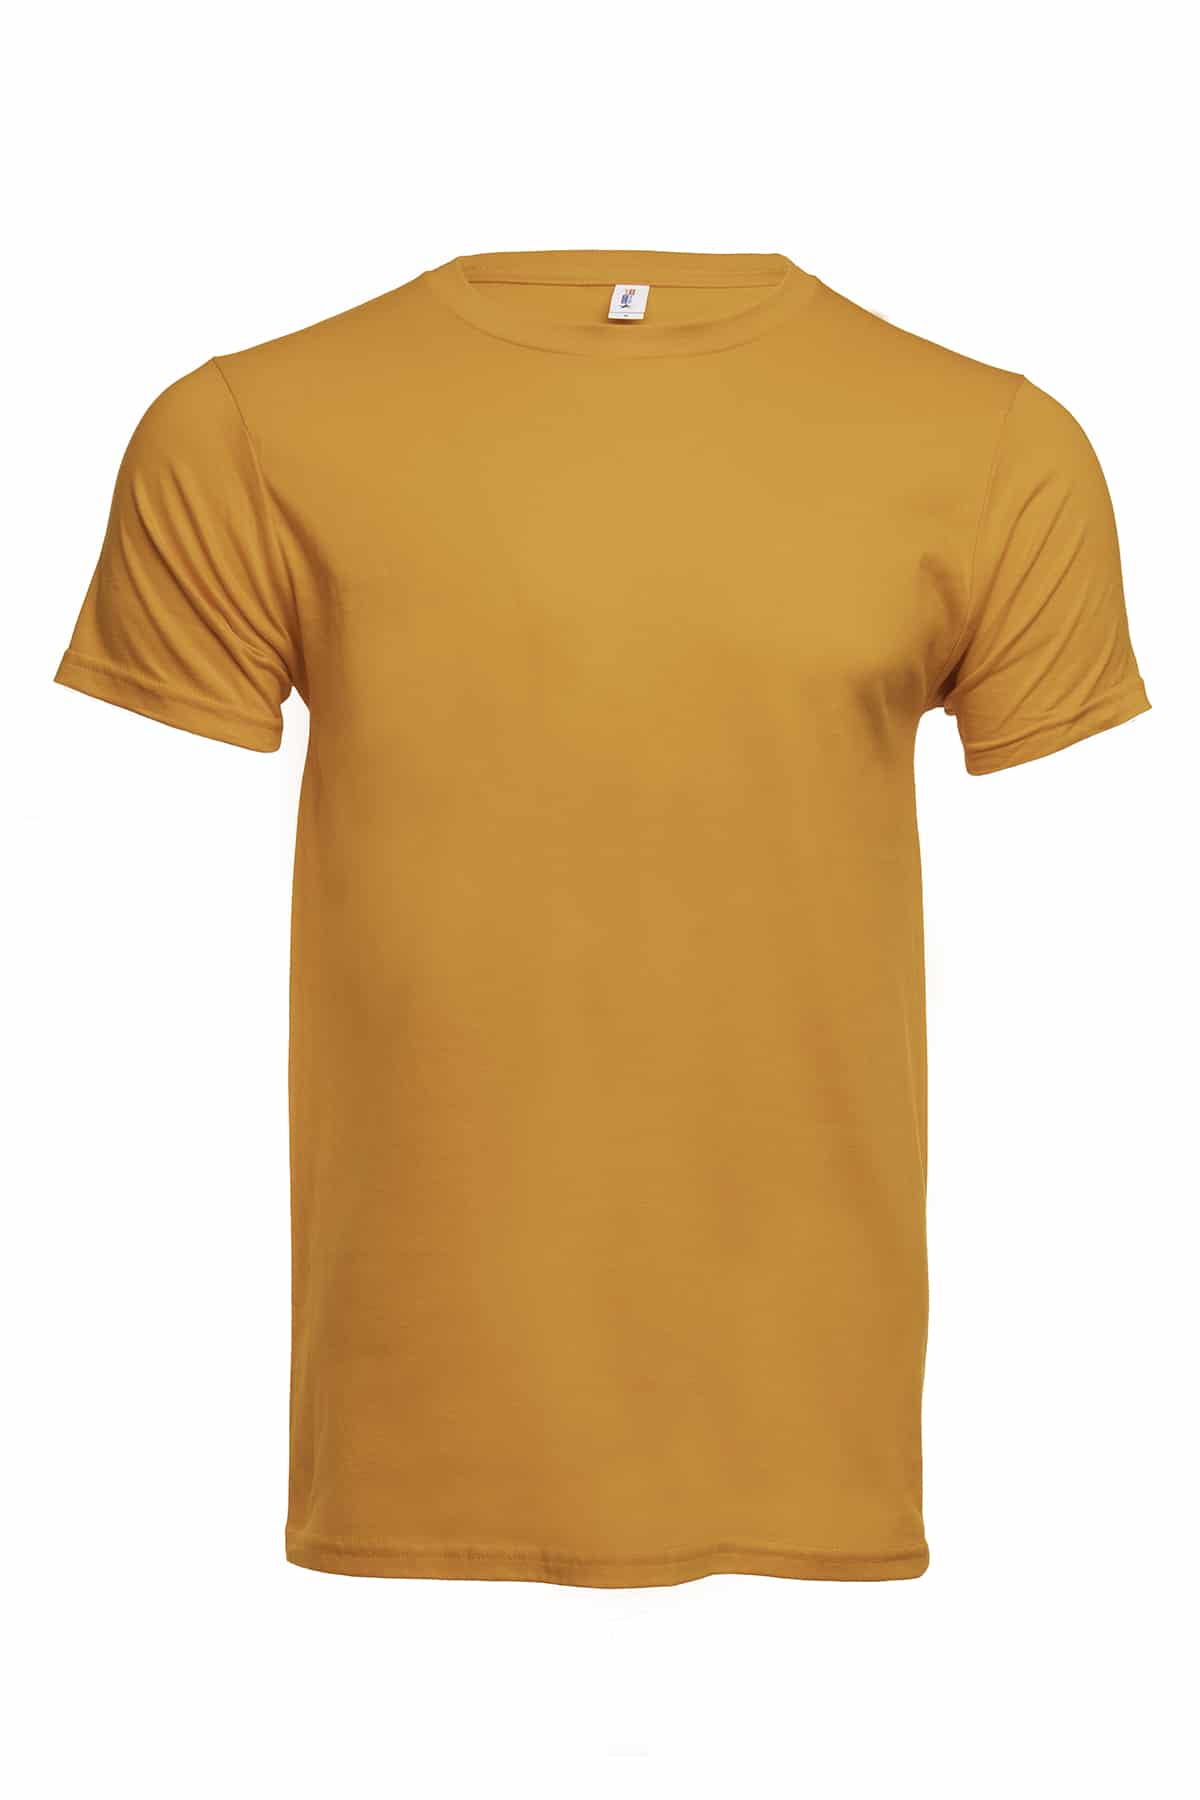 3100 Orange Front T-shirt